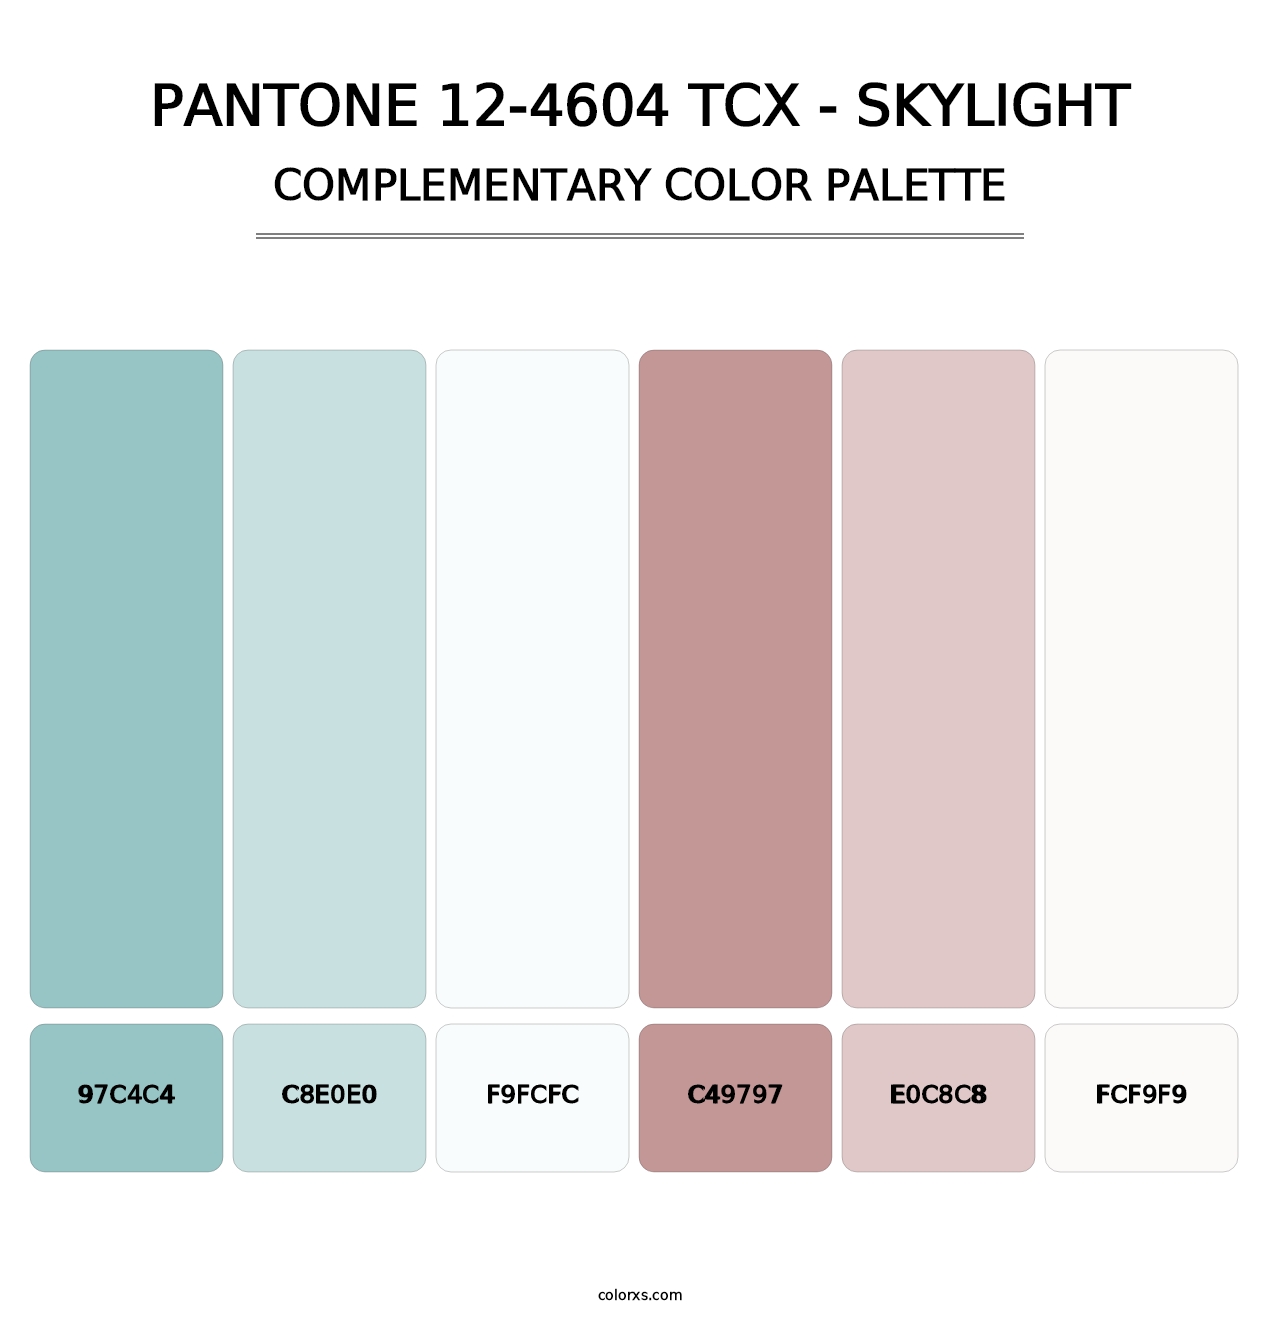 PANTONE 12-4604 TCX - Skylight - Complementary Color Palette